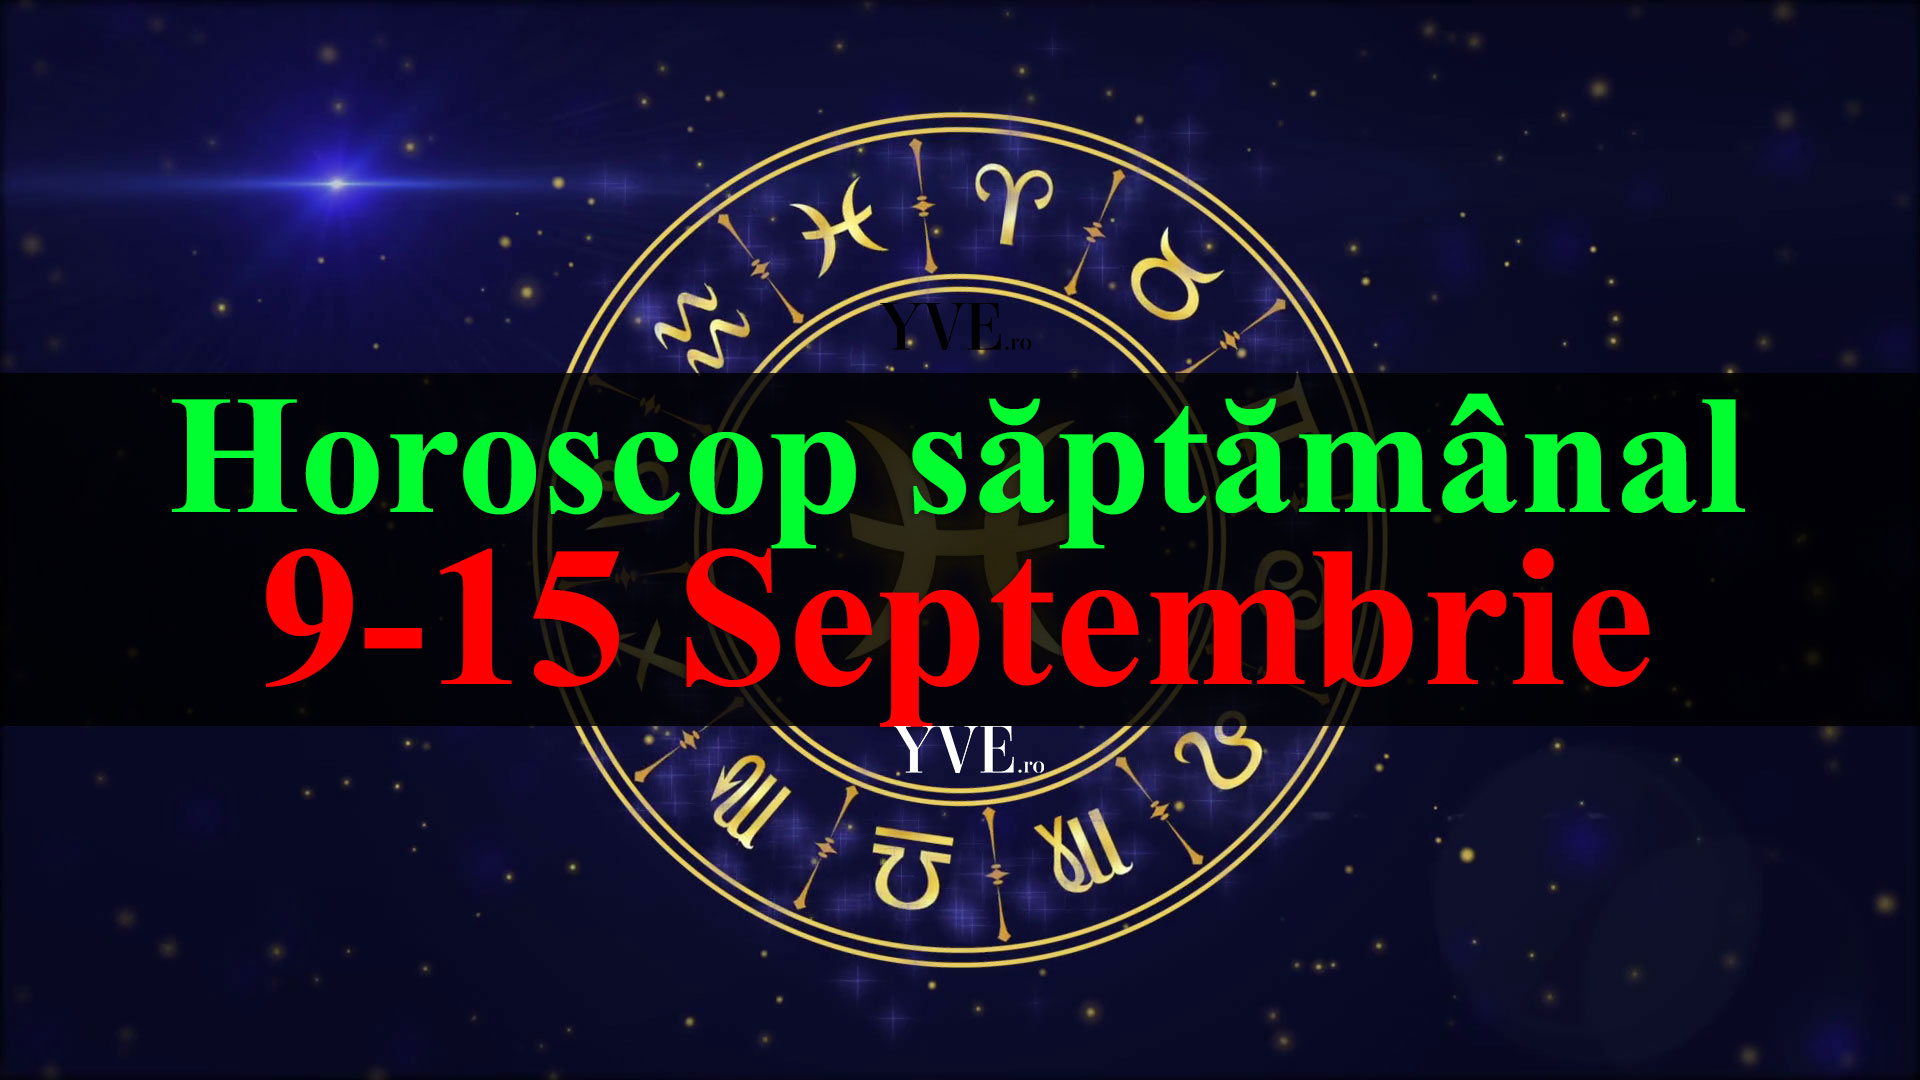 Horoscop saptamanal 9-15 Septembrie 2019